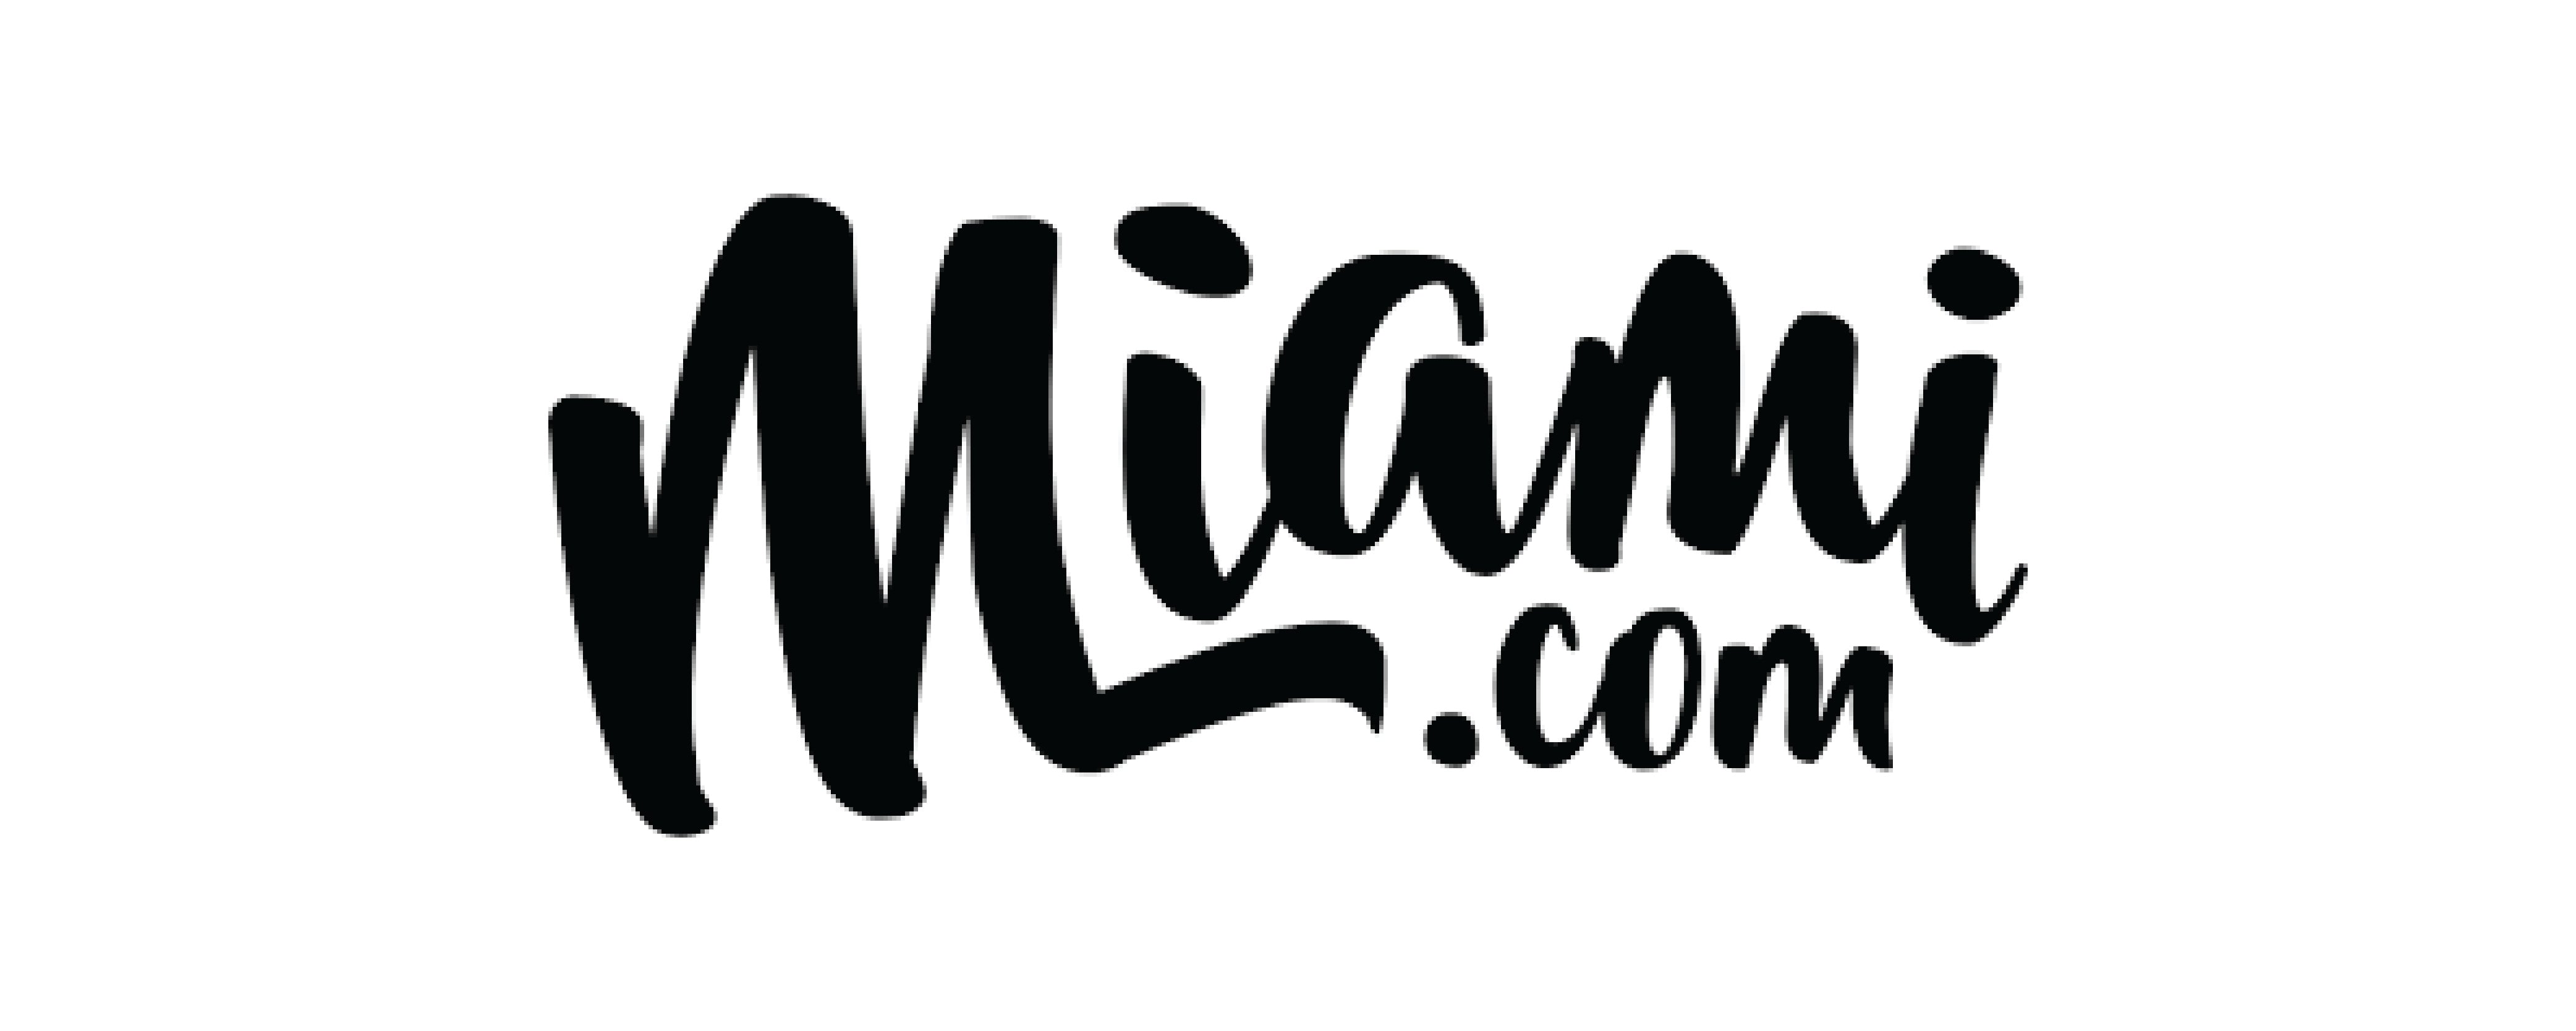 Featured on Miami.com